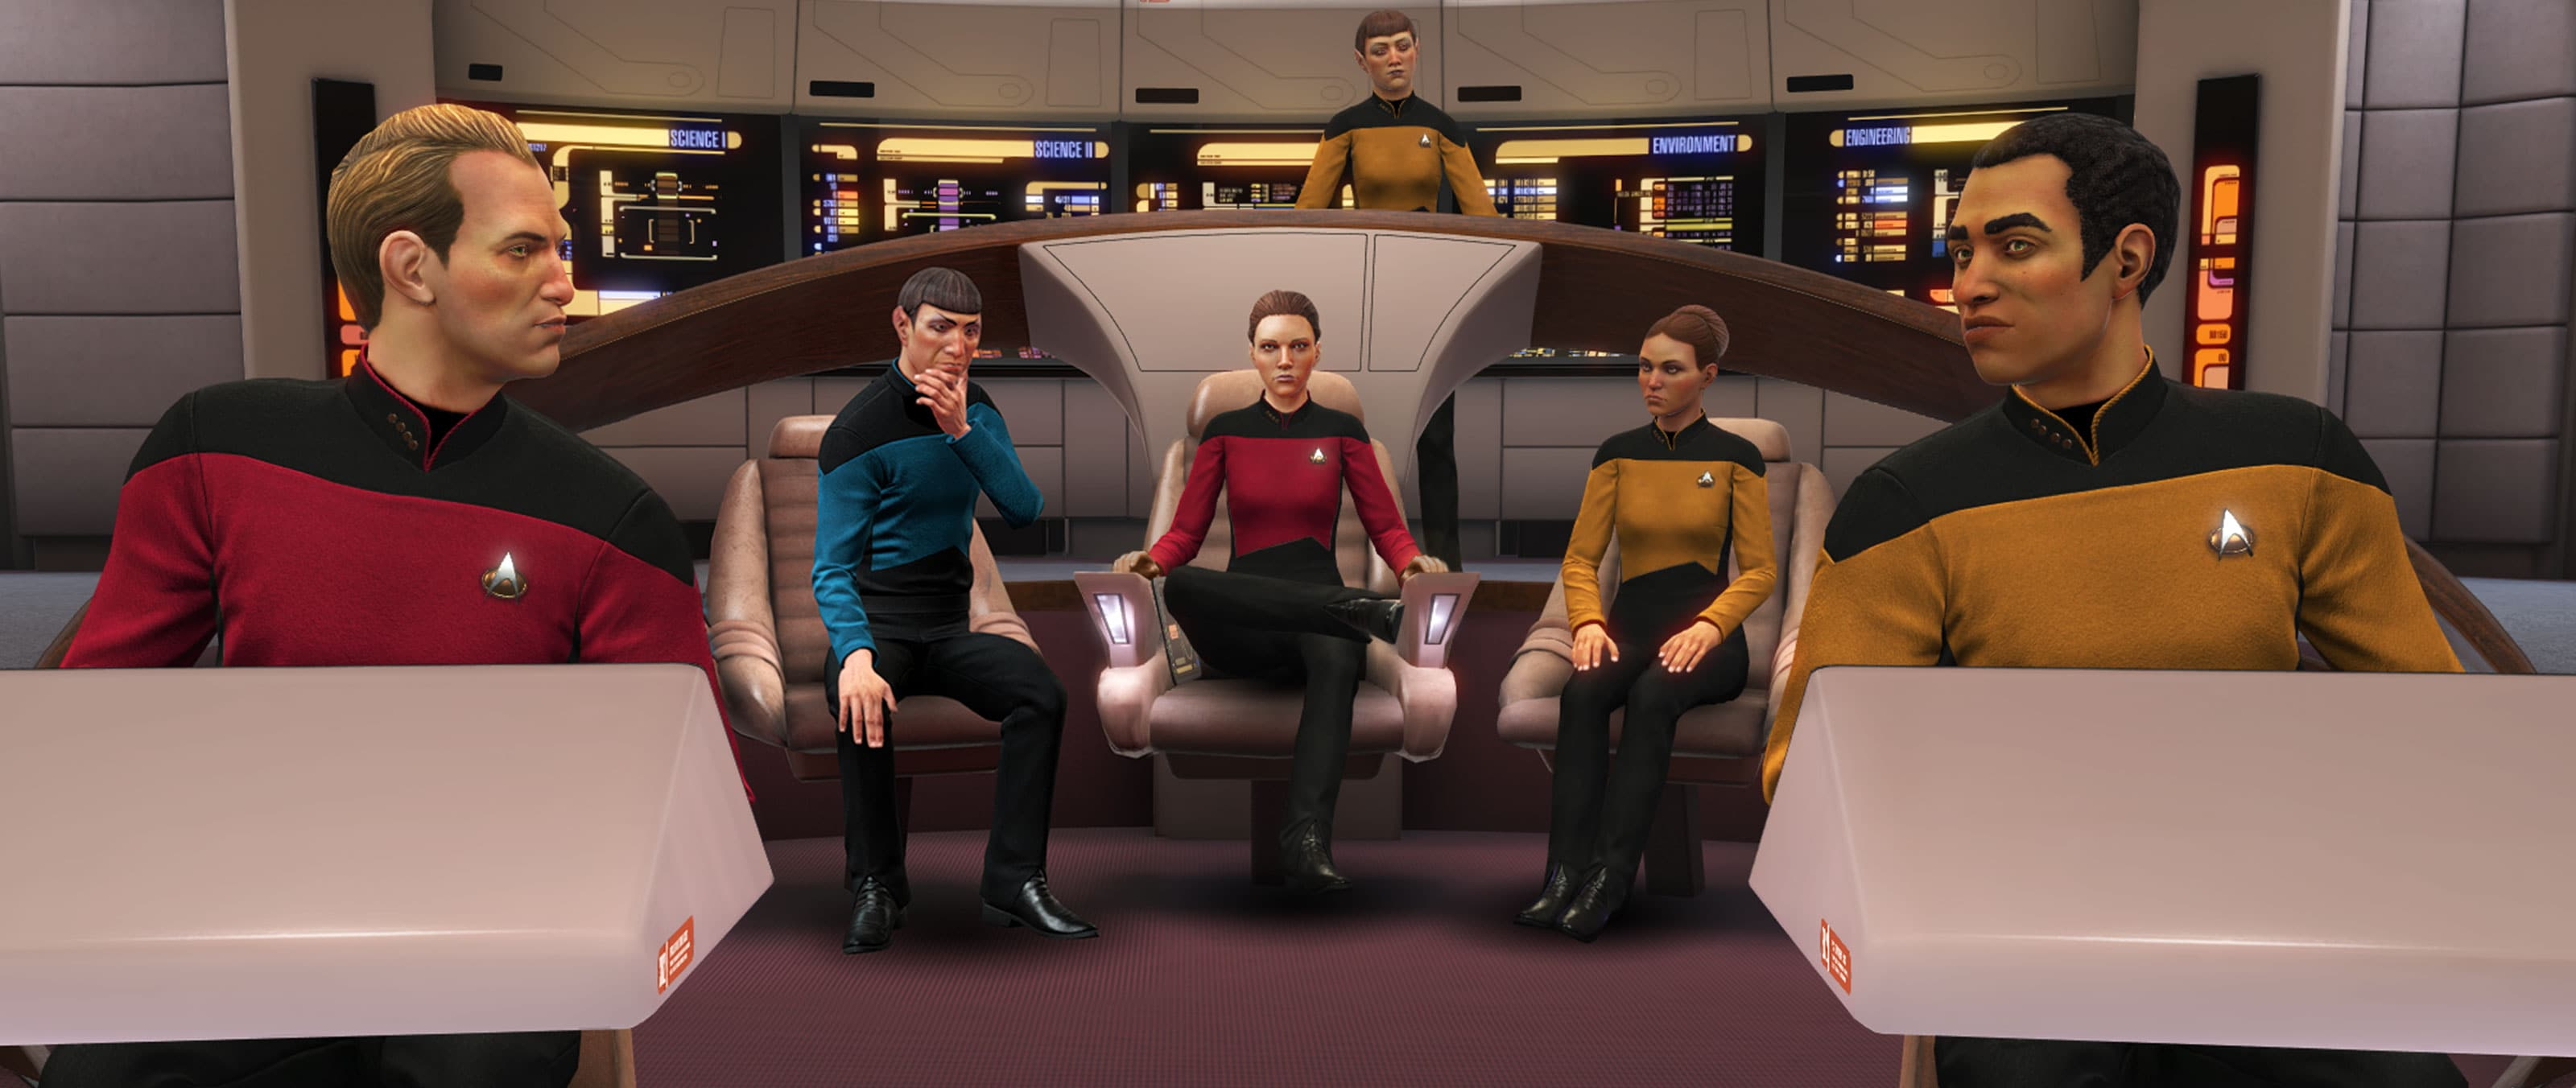 3200x1352 Star Trek Bridge Crew | Ubisoft (US